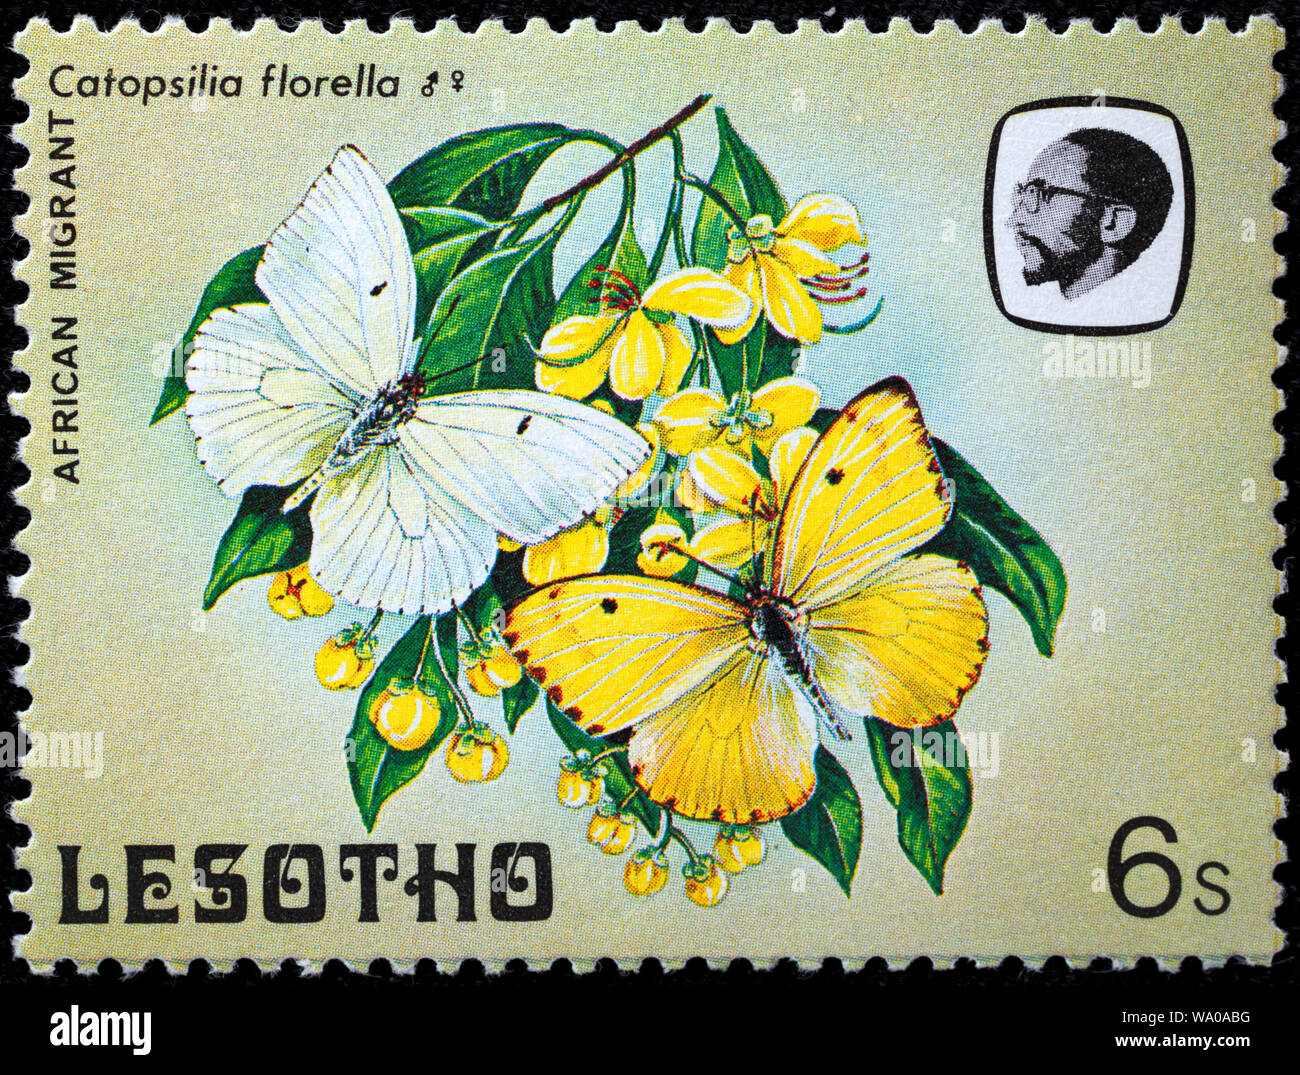 African migrant, Catopsilia florella, postage stamp, Lesotho, 1984 Stock Photo